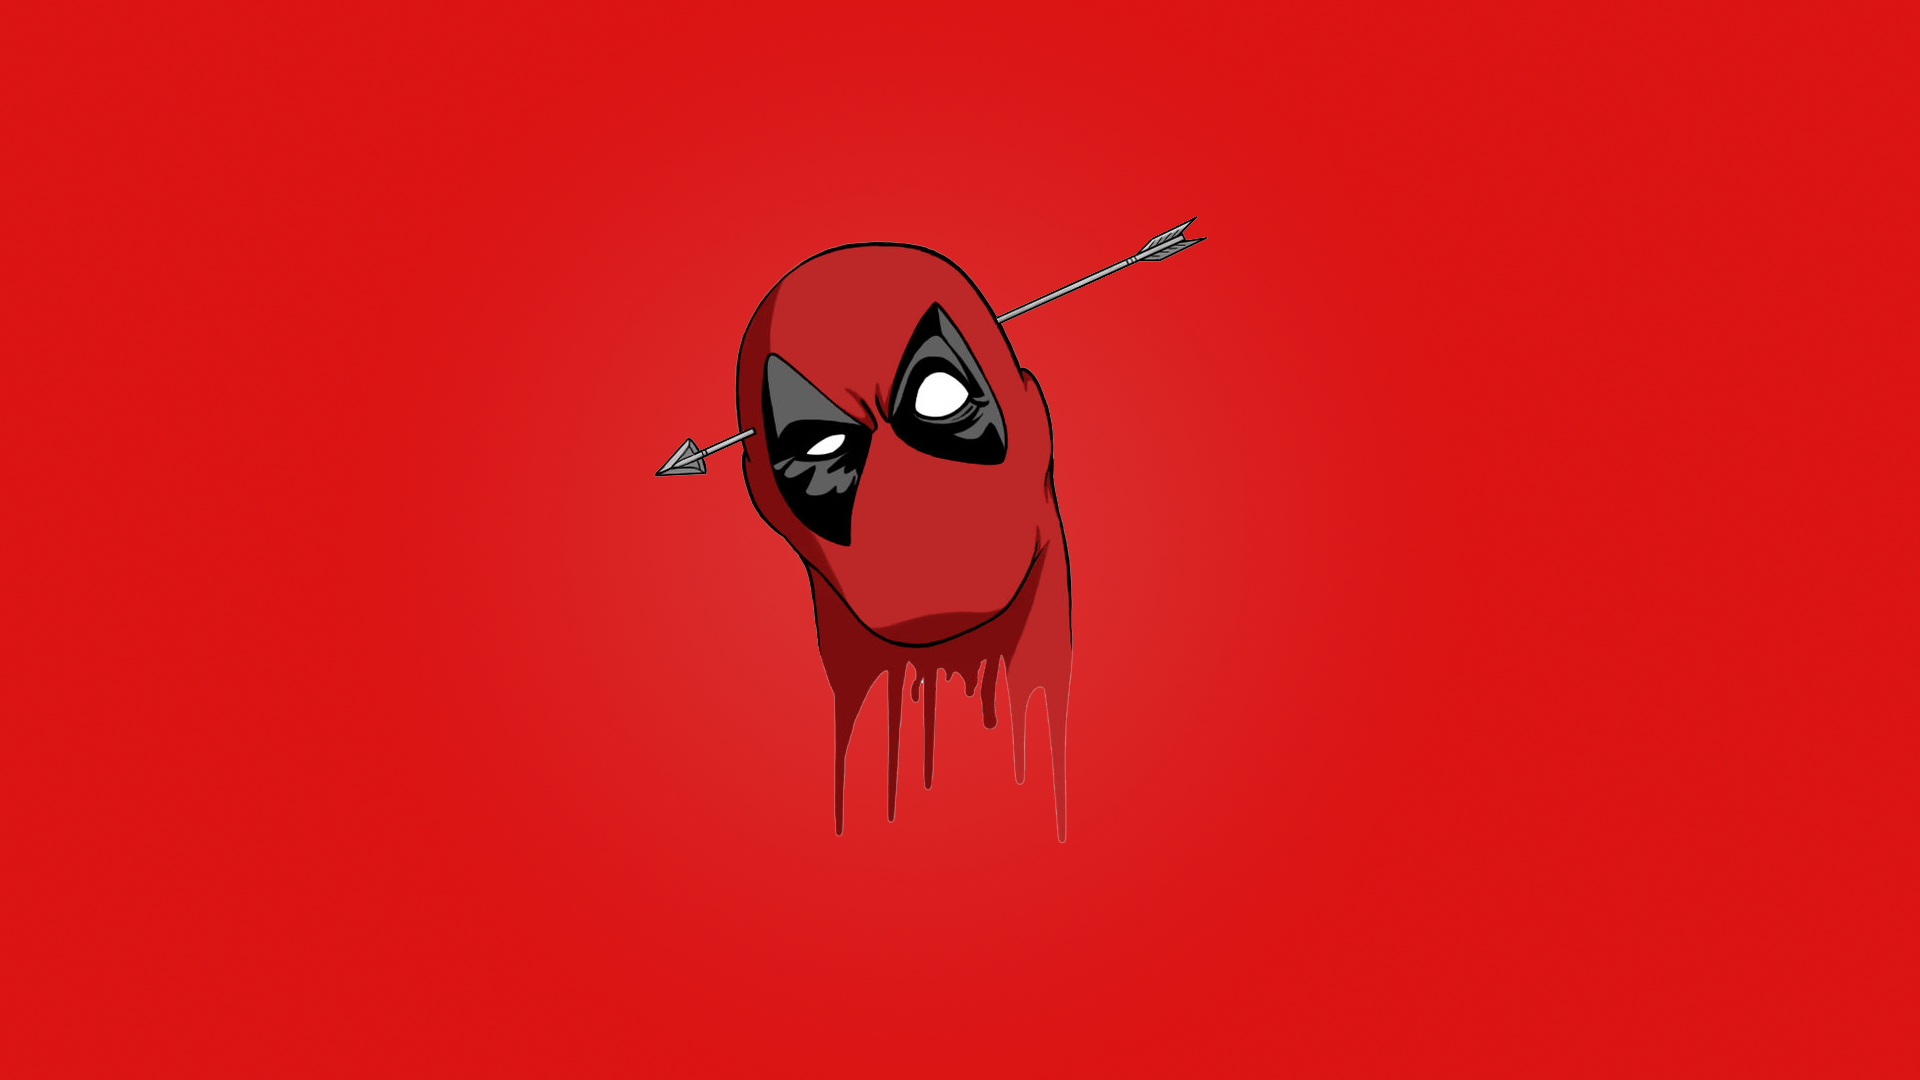 Deadpool Digital Art, HD Artist, 4k Wallpaper, Image, Background